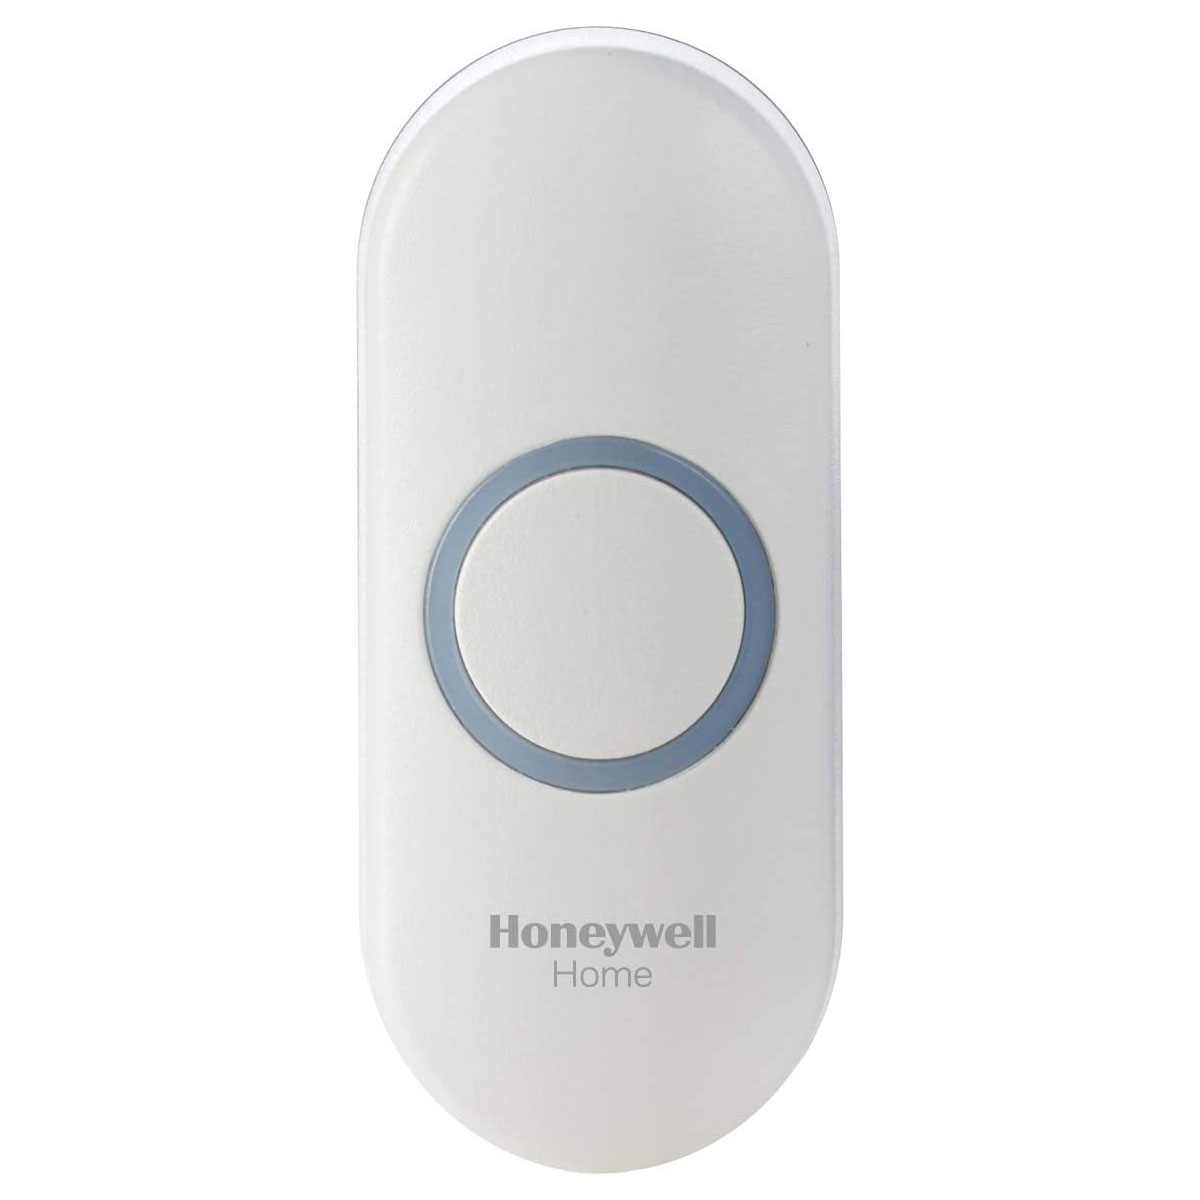 Honeywell Home Wireless Doorbell Push Button for Series 3, 5, 9 Door Bells (White) - RPWL400W